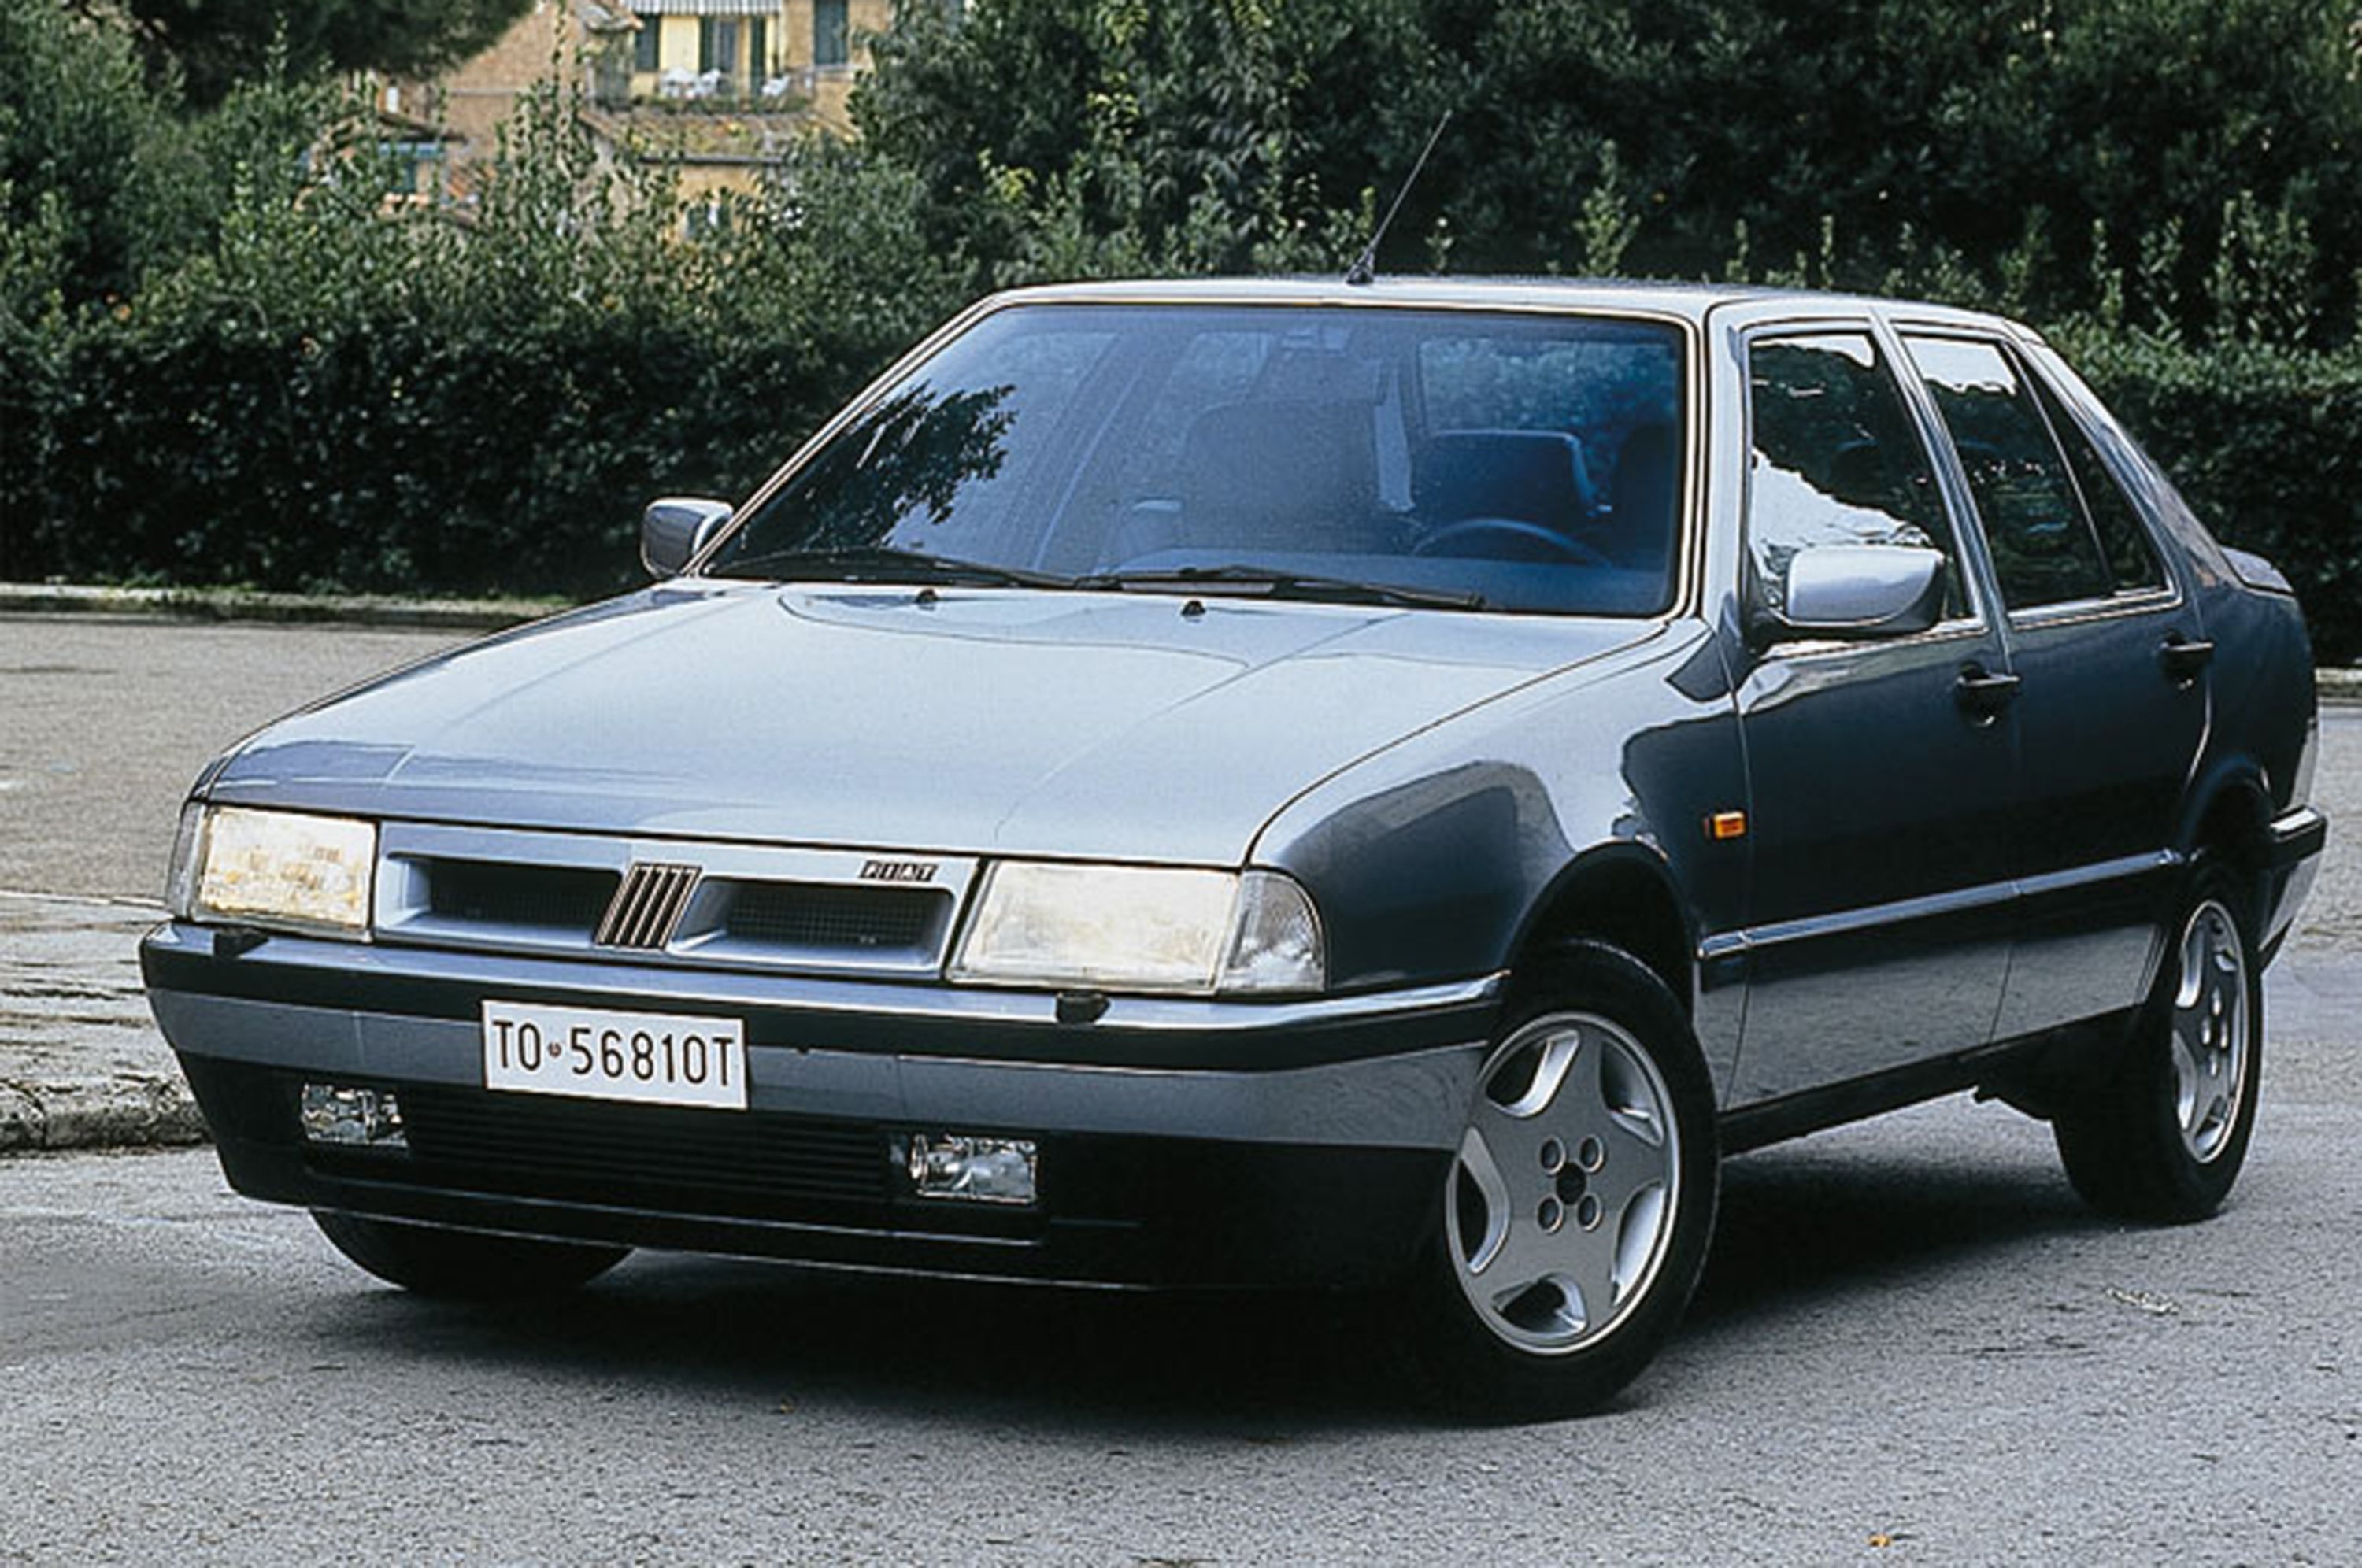 Fiat Croma (1985-97)